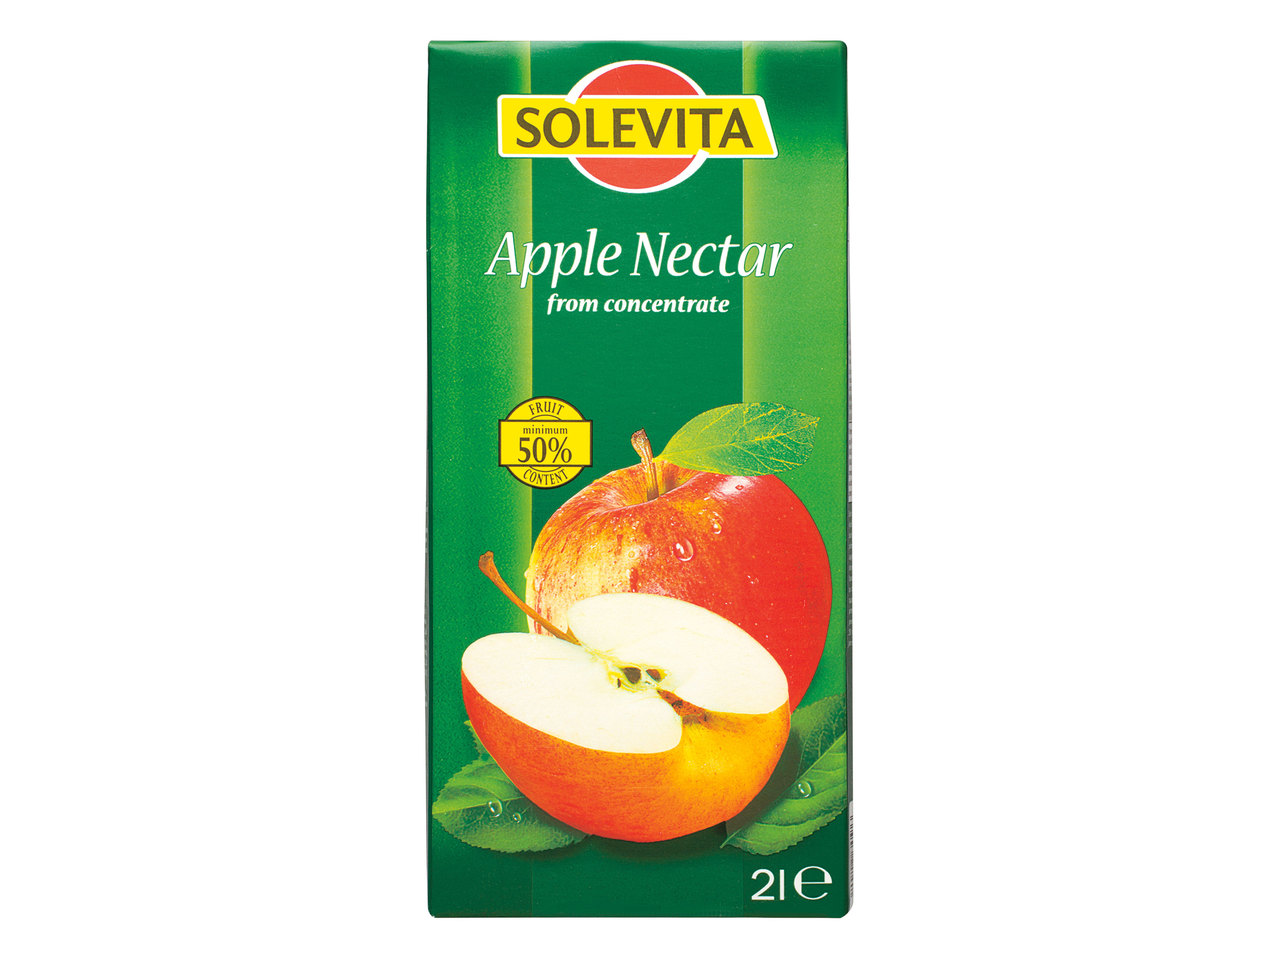 Nectar de mere